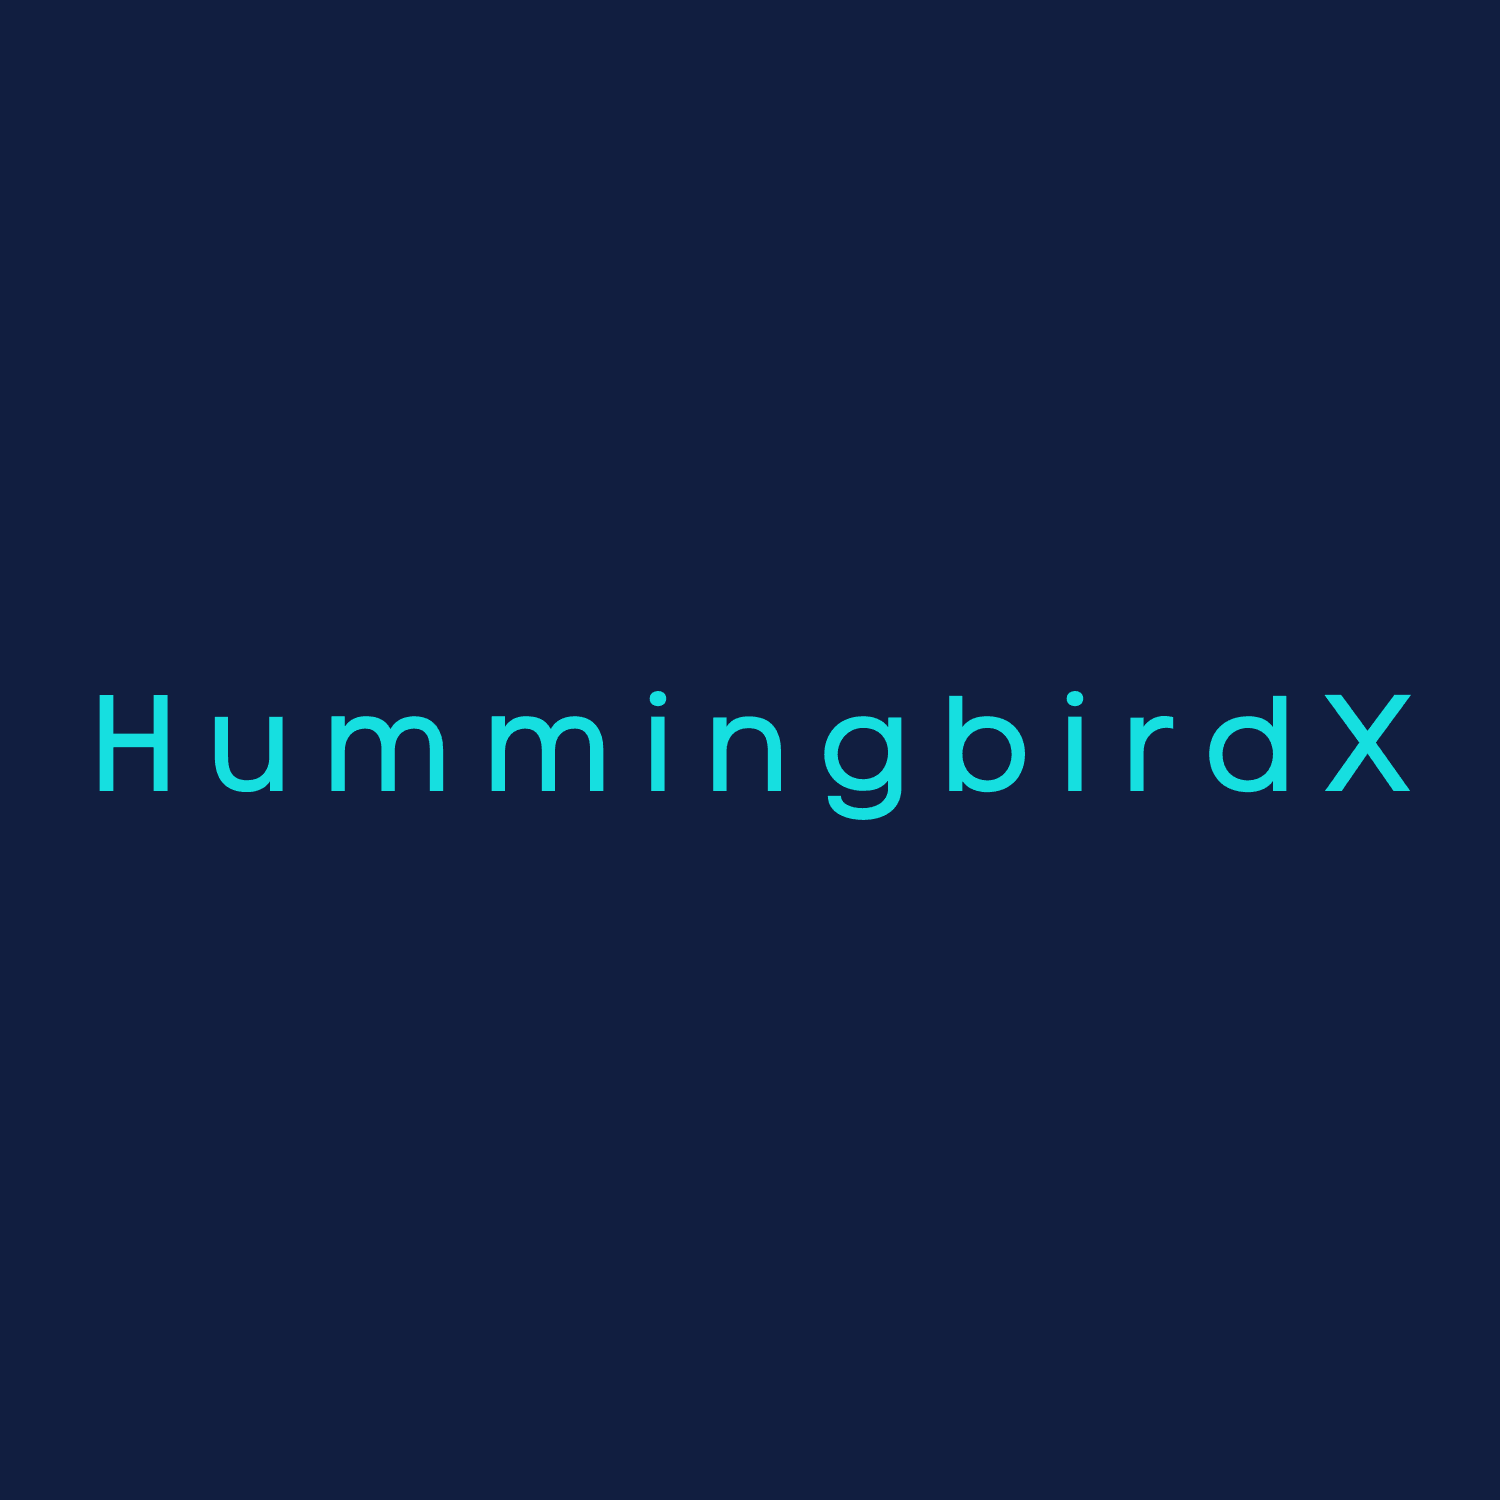 HummingbirdX 橫幅